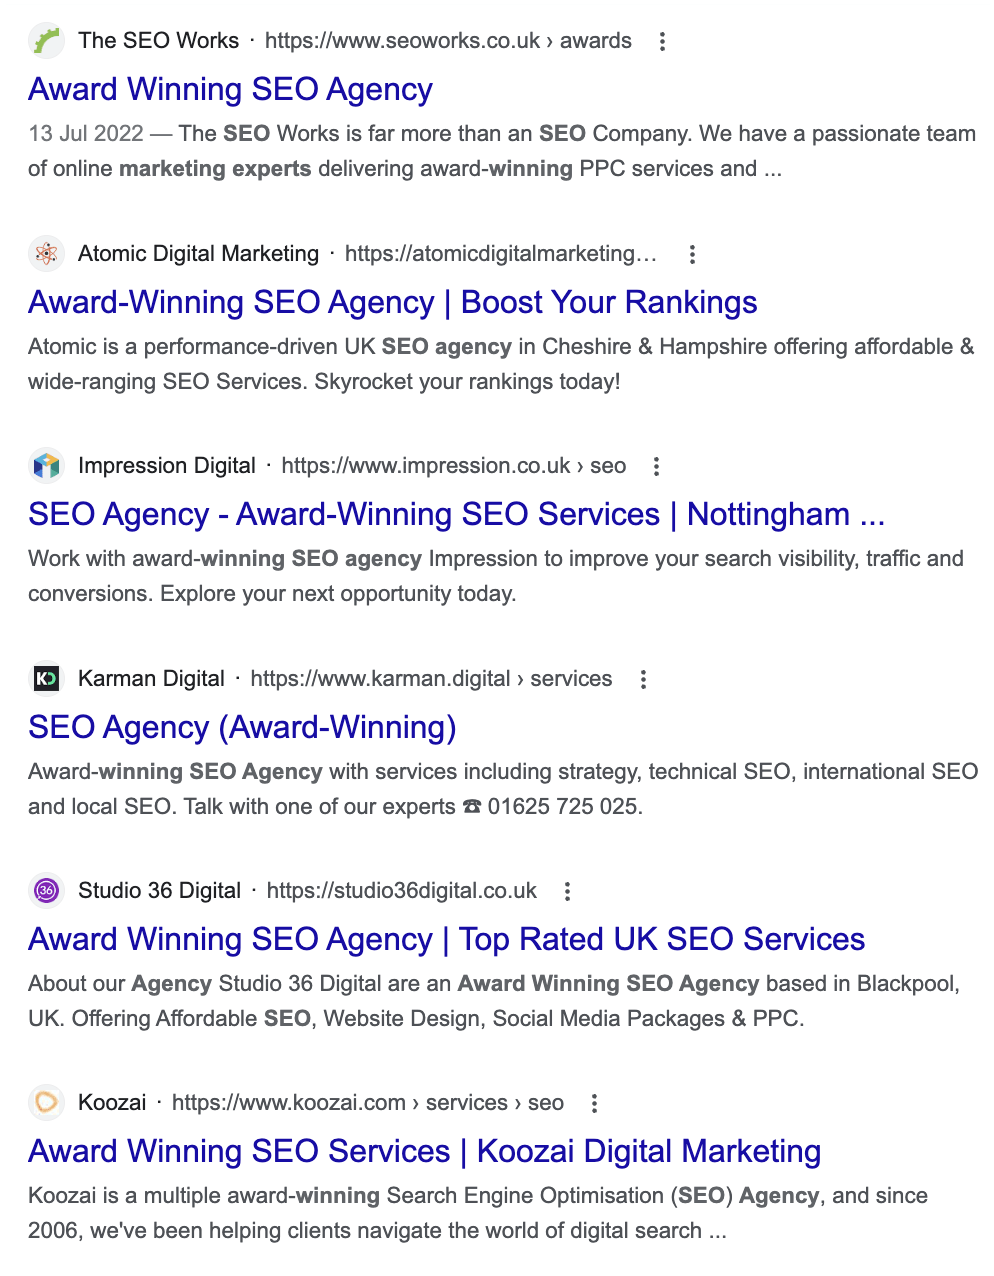 Google SERP showing many SEO agencies claiming to be award-winning